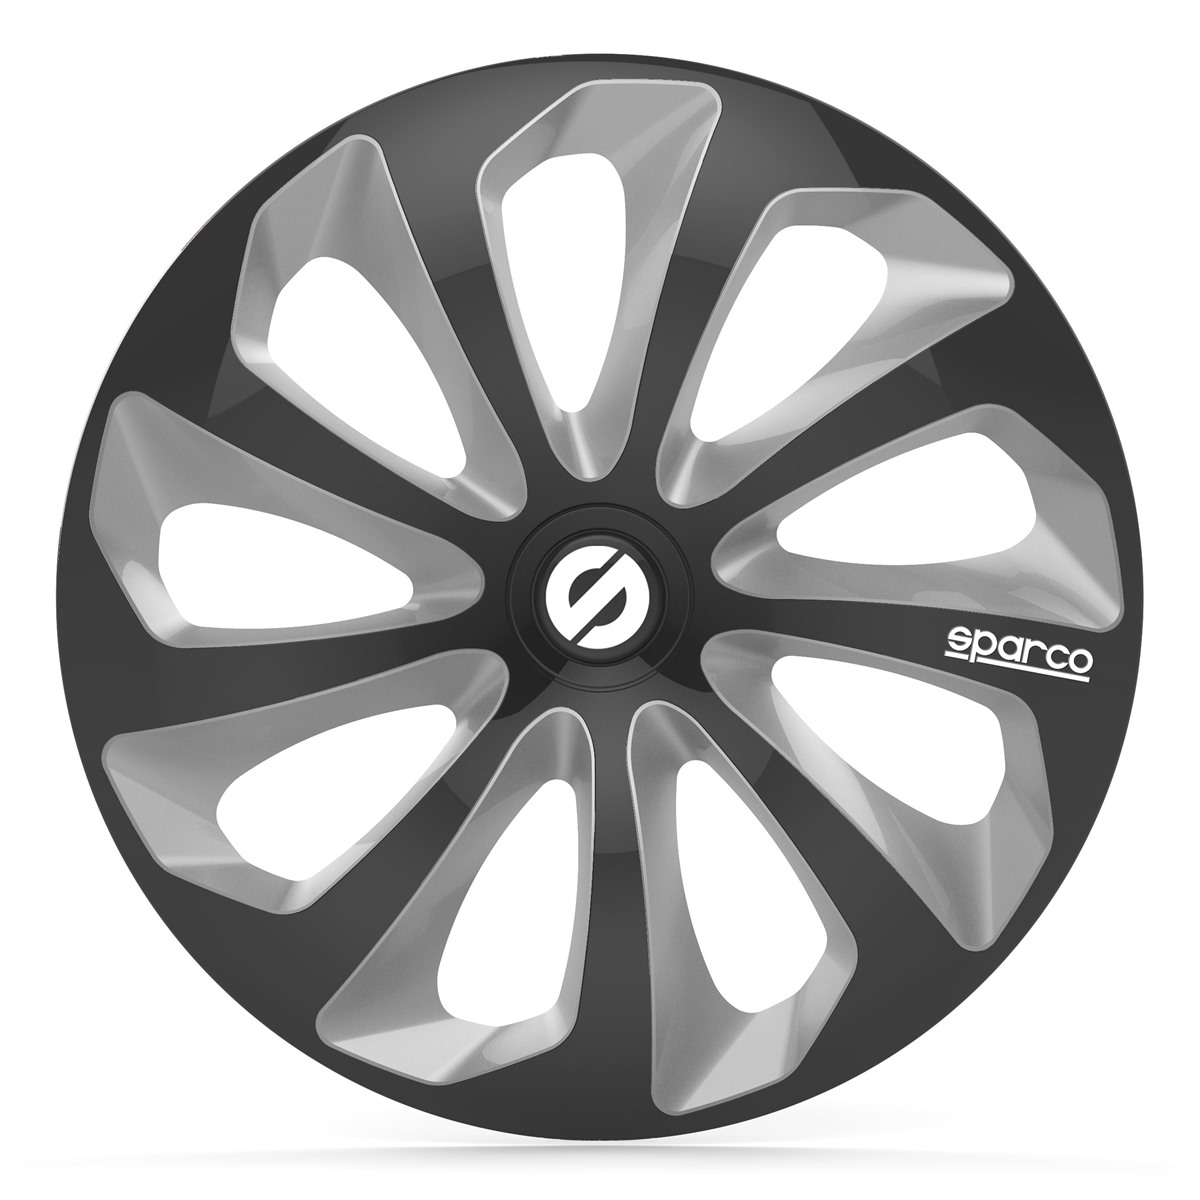 Wheel covers Sicilia 13 black-silver 4pcs Sparco